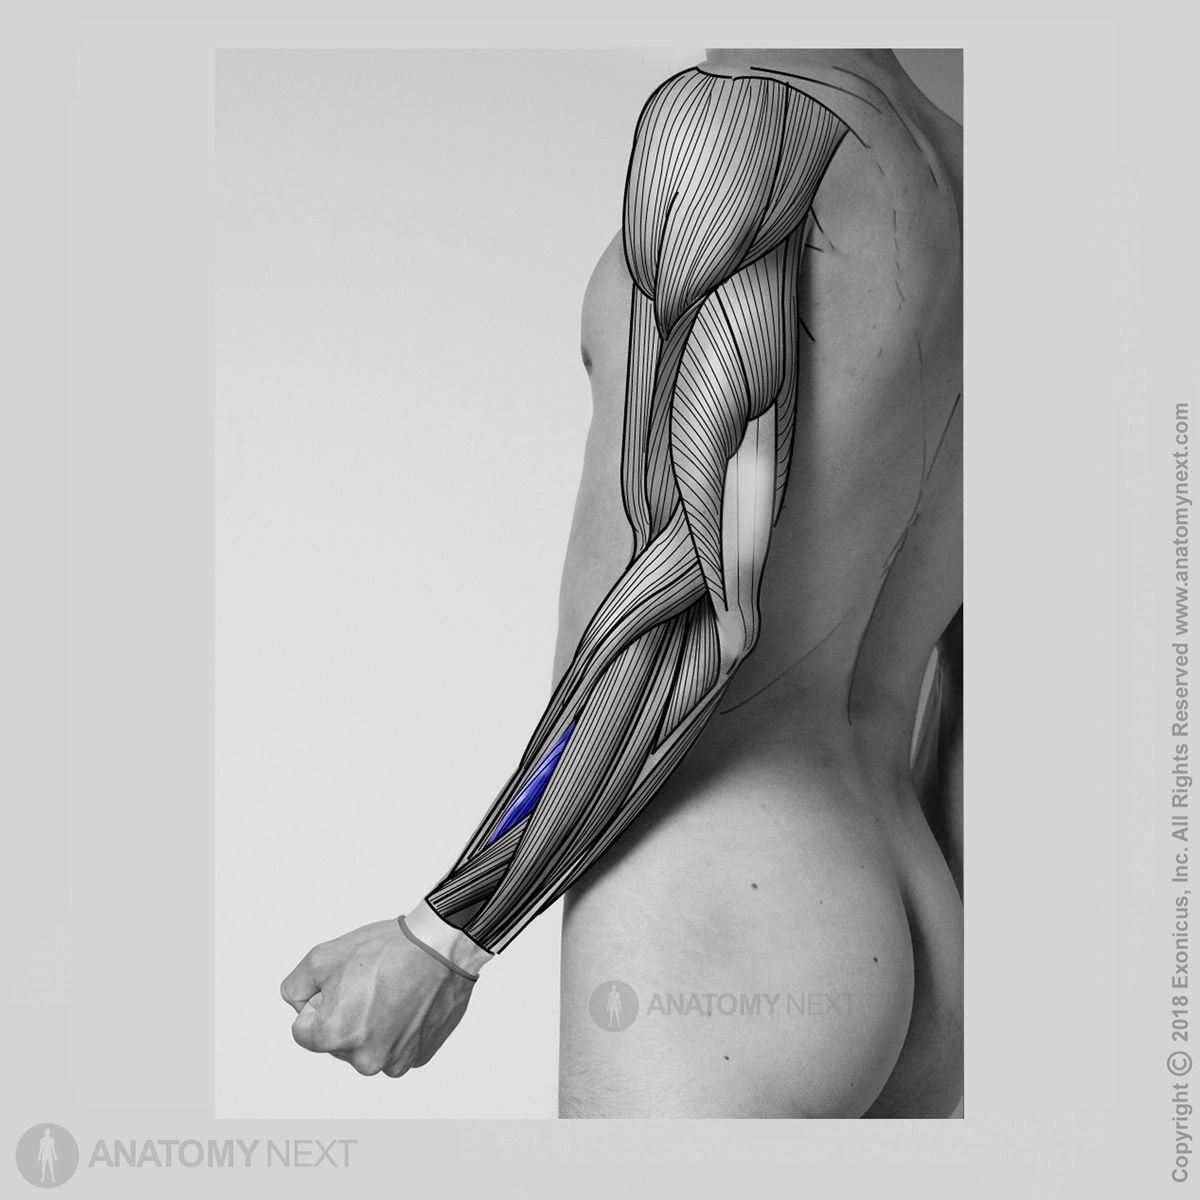 Extensor carpi radialis brevis, Arm extensors, Arm muscles, Forearm muscles, Muscles of forearm, Extensors of forearm, Lateral compartment muscles, Lateral compartment of forearm, Muscles of upper limb, Human muscles